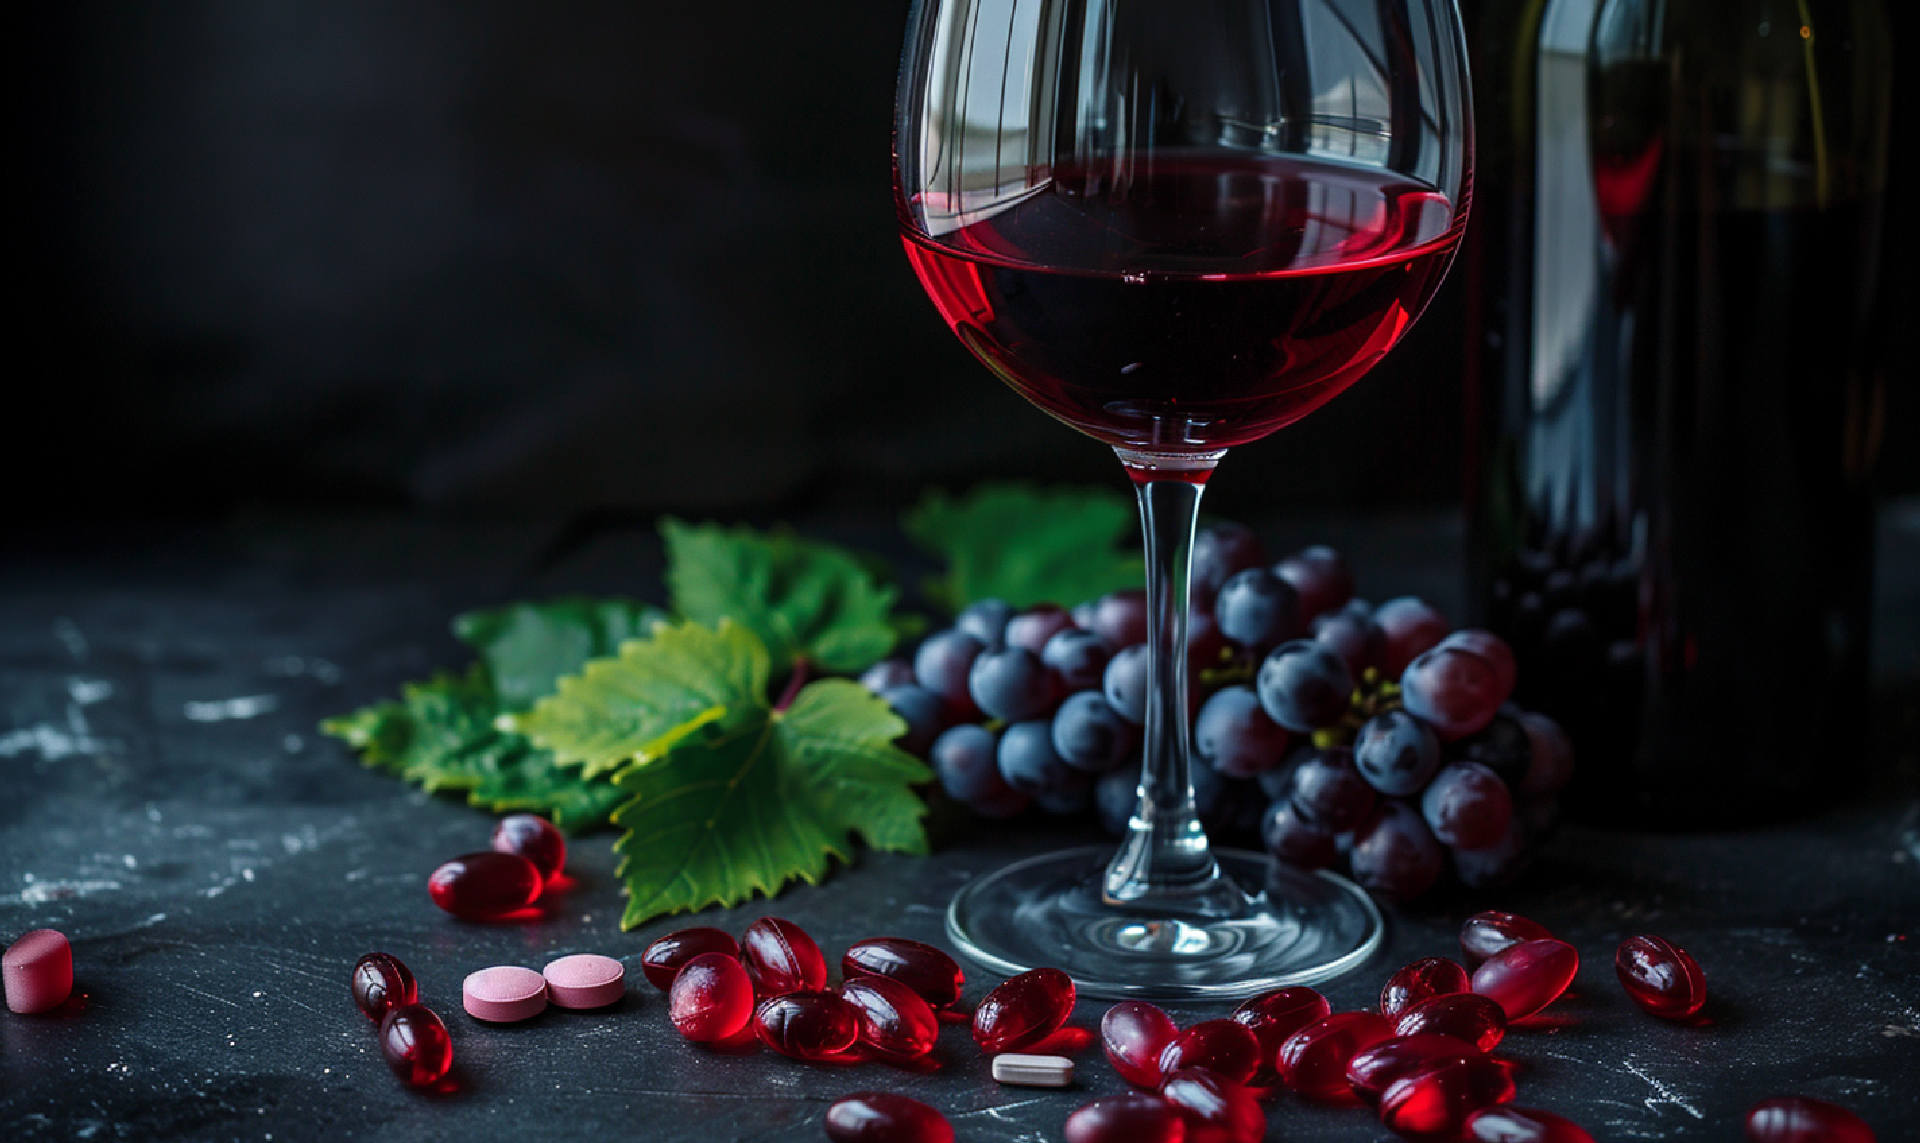 beta blockers & wine health cyrano_create_an_photograph_of_a_harmonious_blend_of_wine - by umut taydaş